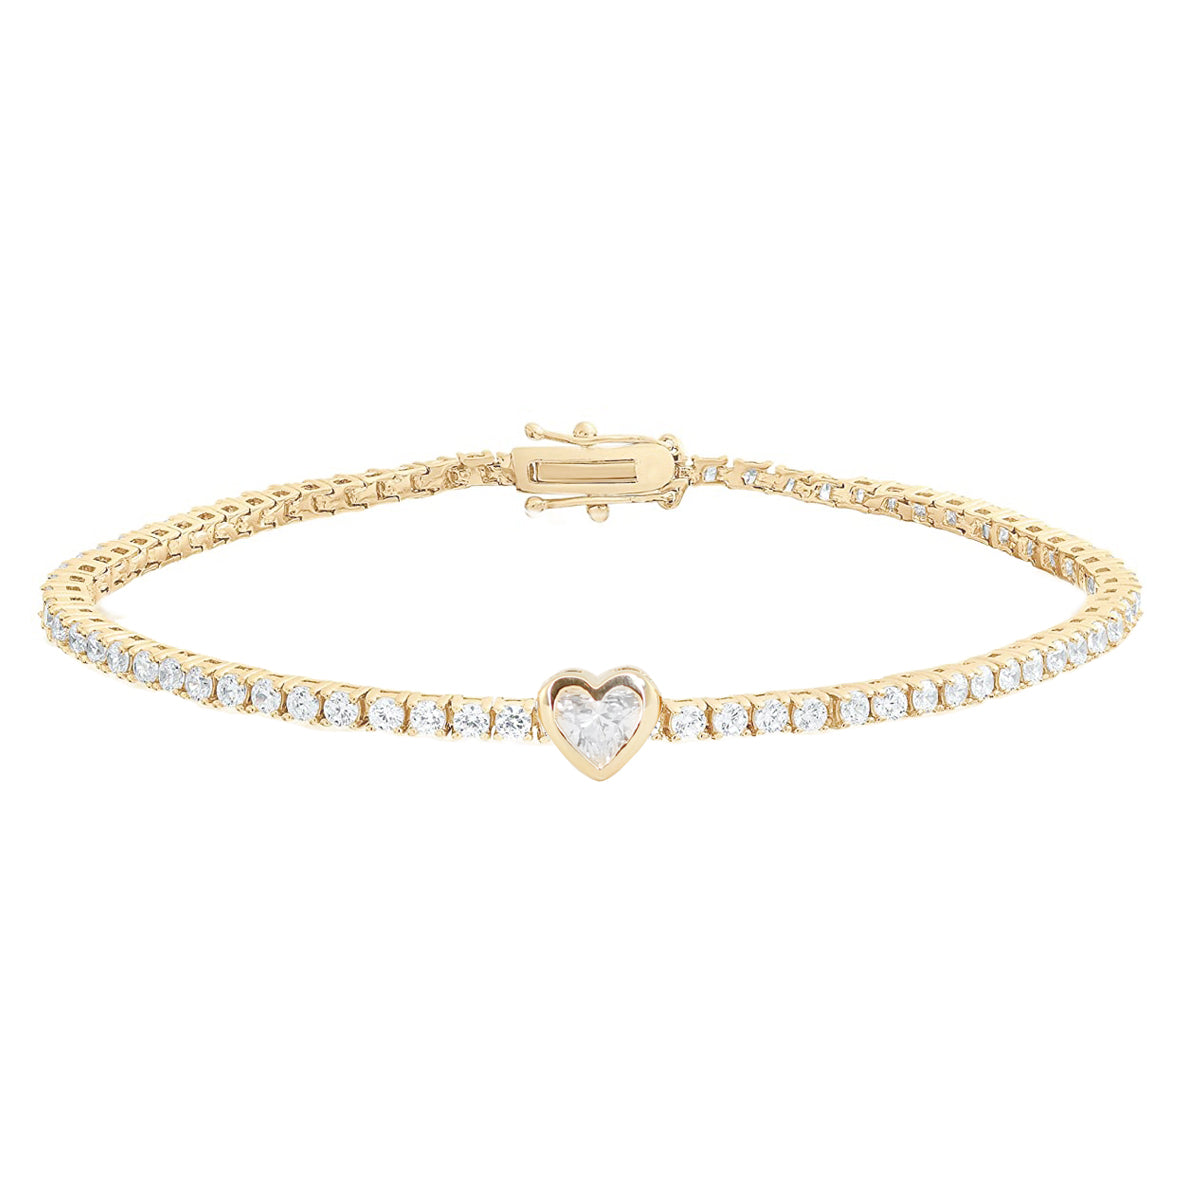 4 Ct Diamond Tennis Bracelet, 14K Gold Diamond Bracelet, 14kt Gold Genuine  Natural Diamond Bracelet, Beautiful White Diamond Bracelet - Etsy